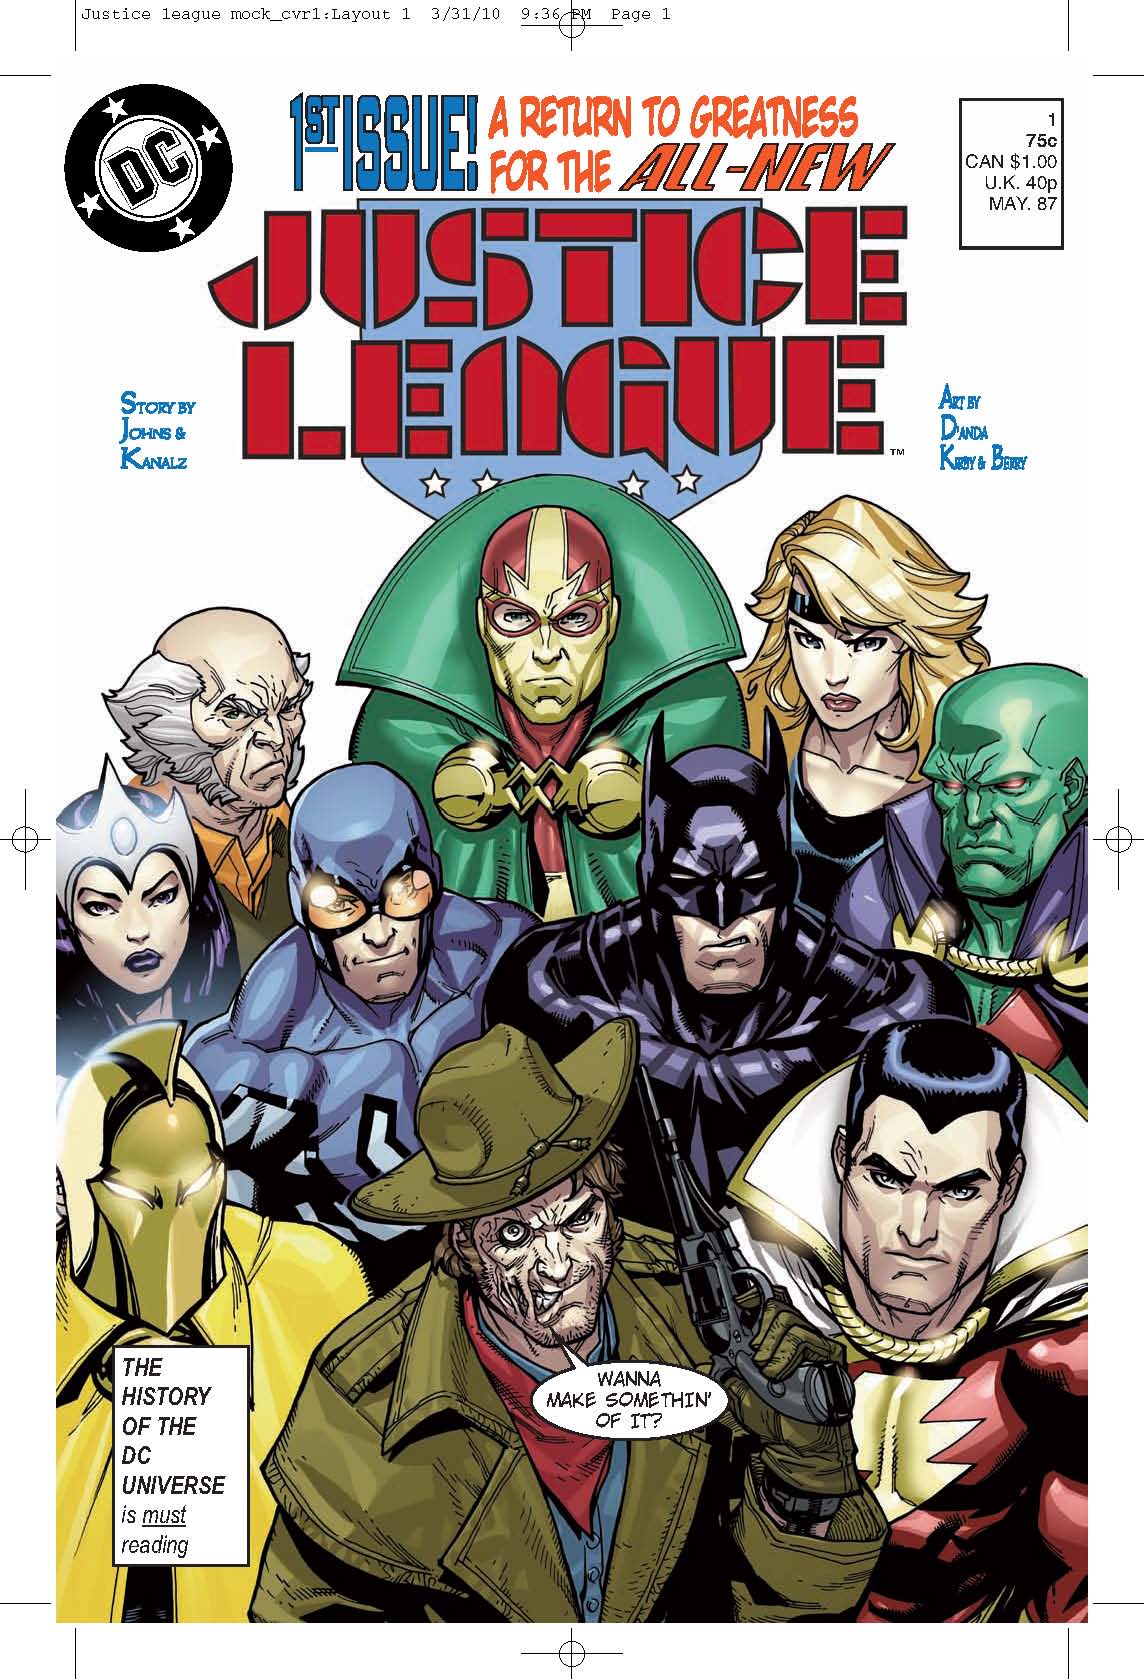 Justice League #1 - Fringe DC Comics crossover